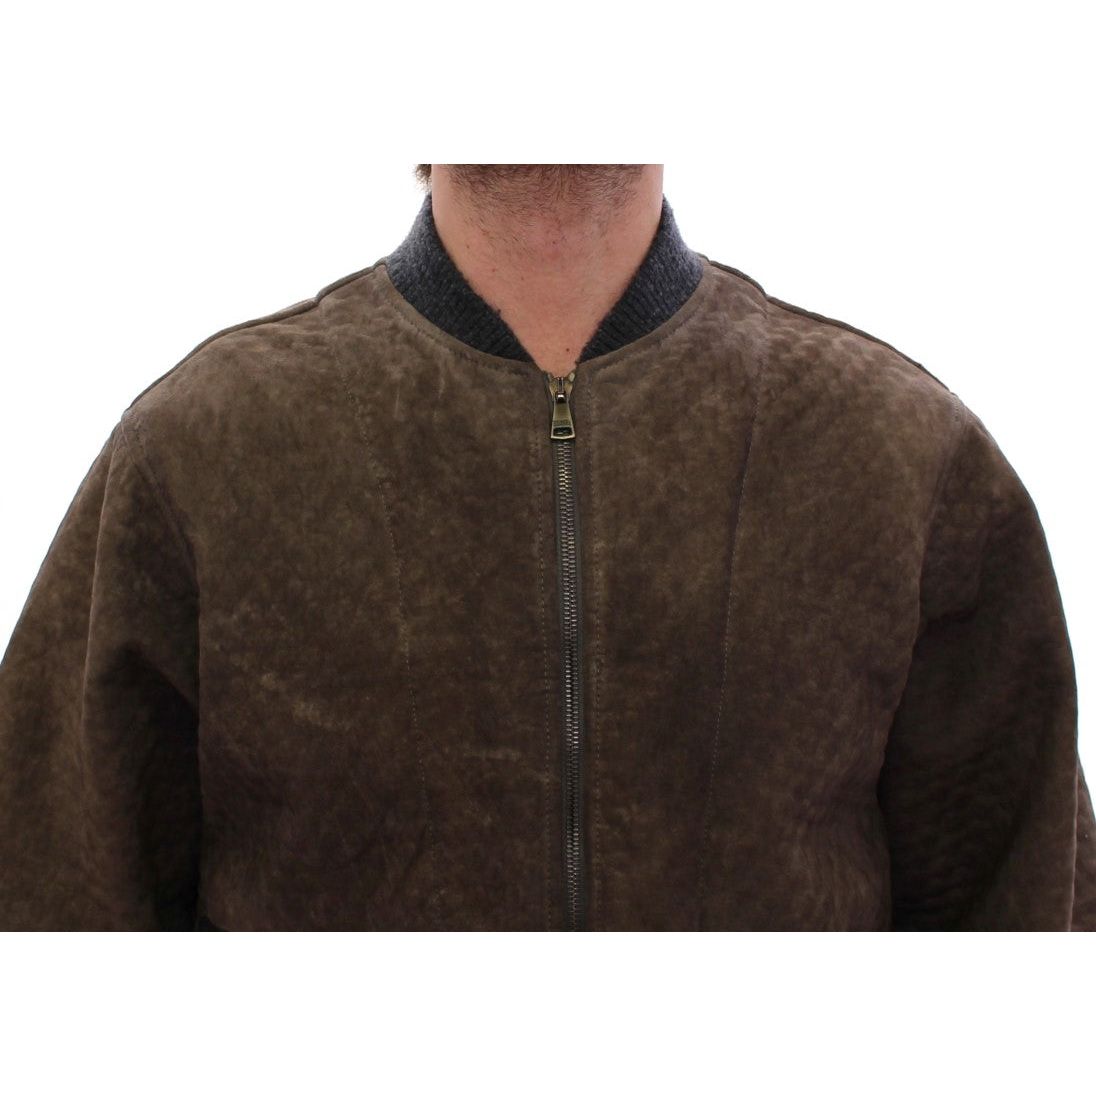 Dolce & Gabbana Elegant Leather & Wool Blend Jacket brown-gray-leather-jacket-coat Coats & Jackets 54860-brown-gray-leather-jacket-coat-3.jpg